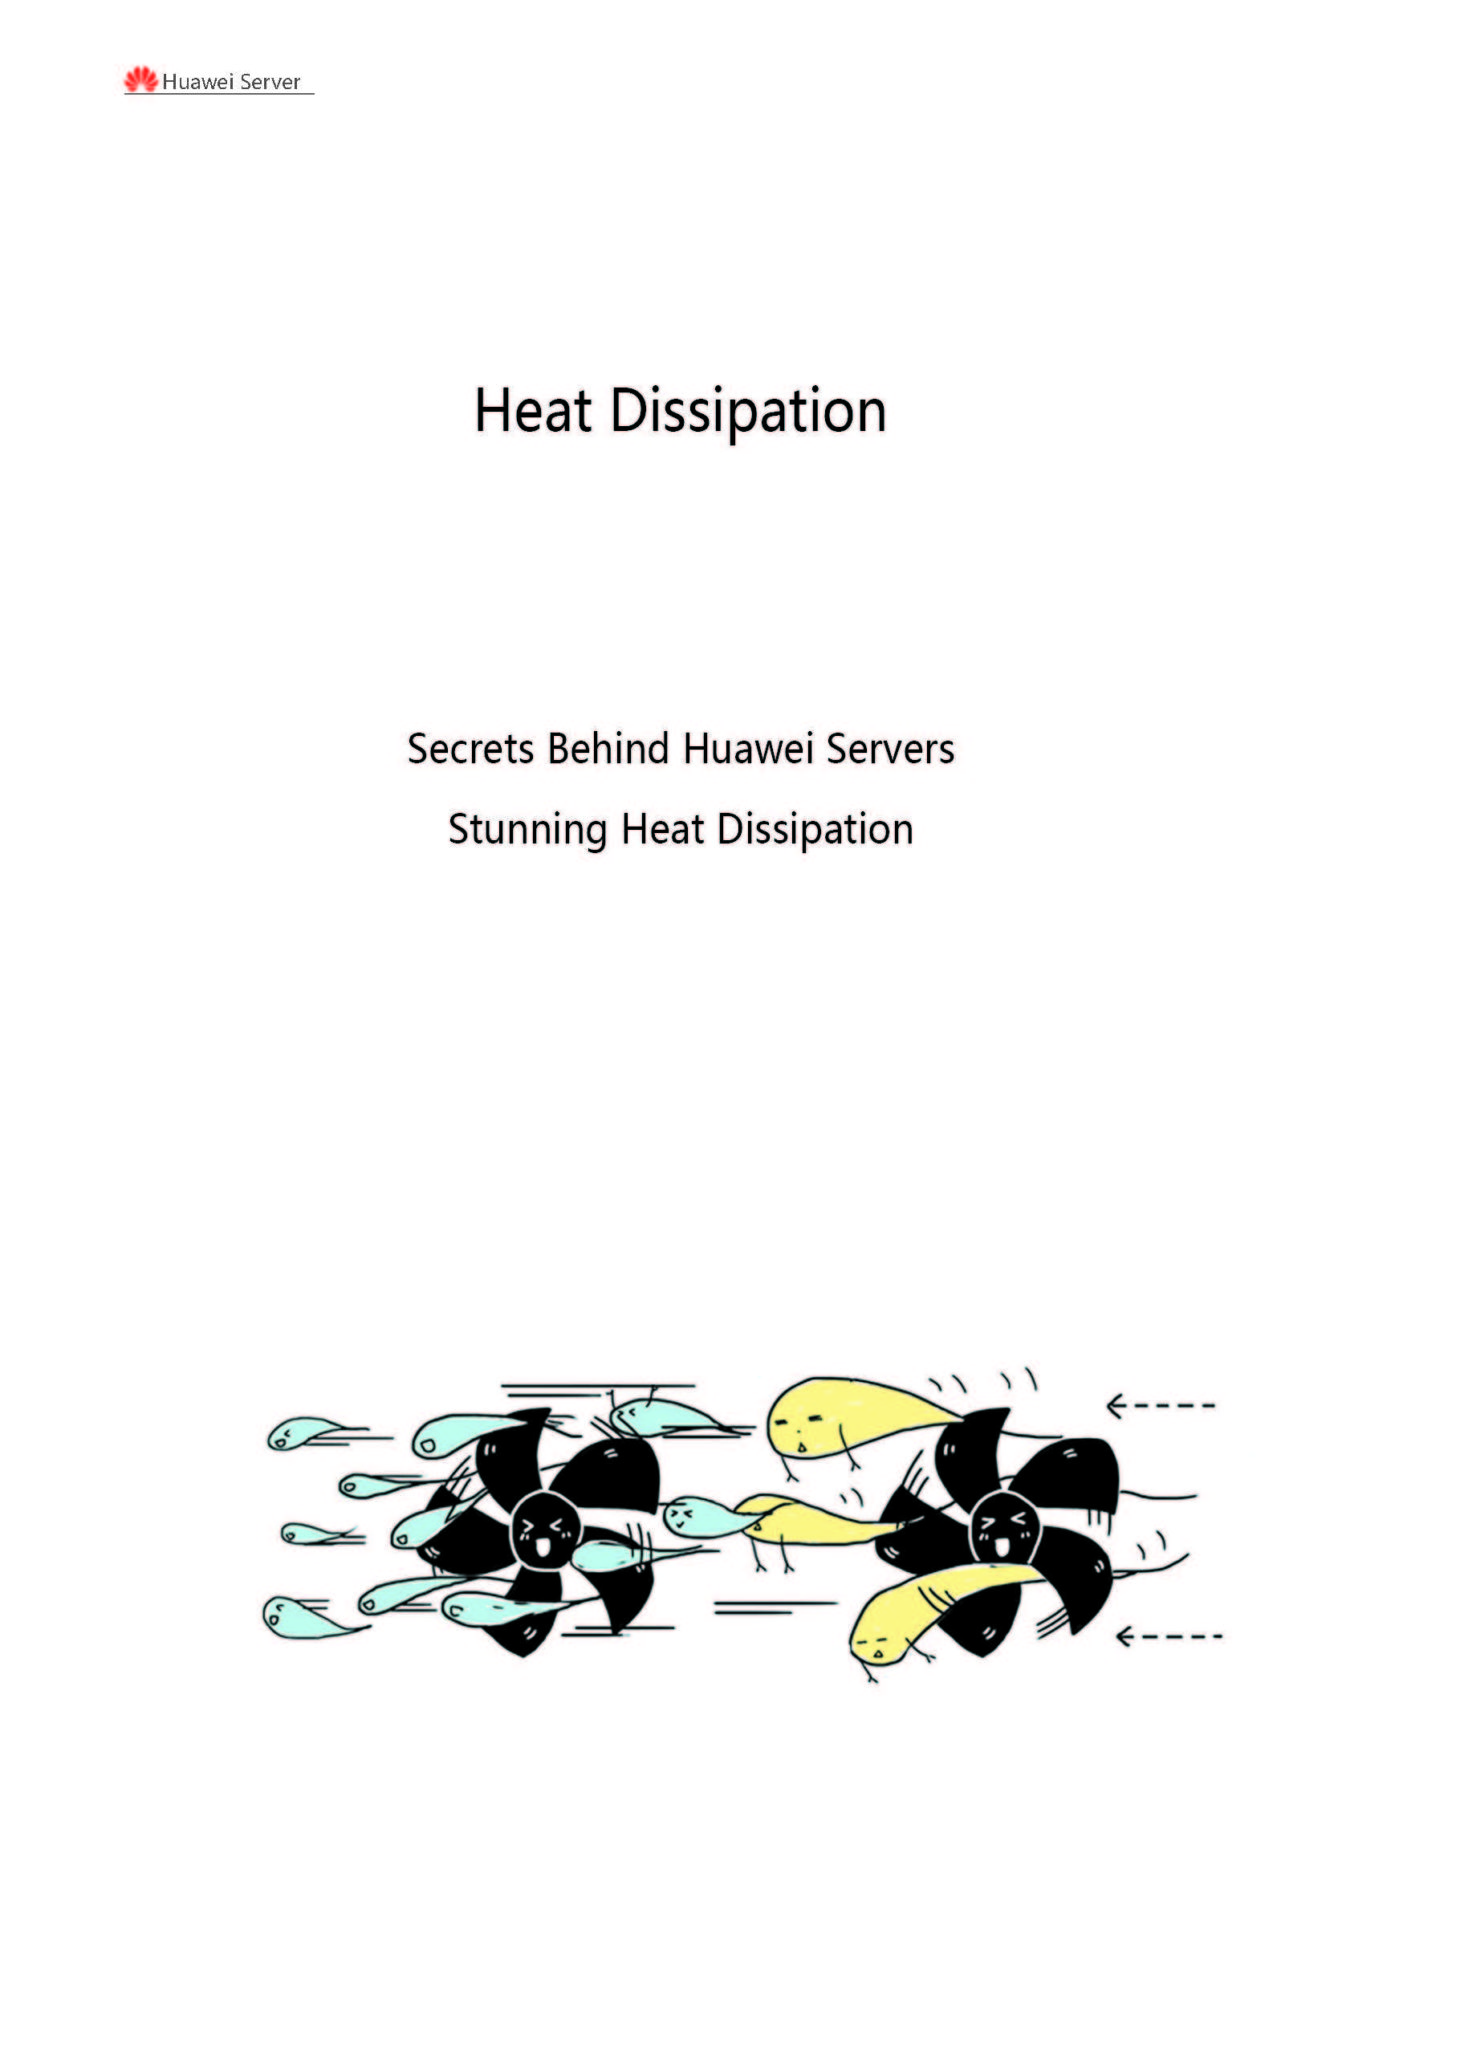 Huawei Server Innovation Genes – Heat Dissipation